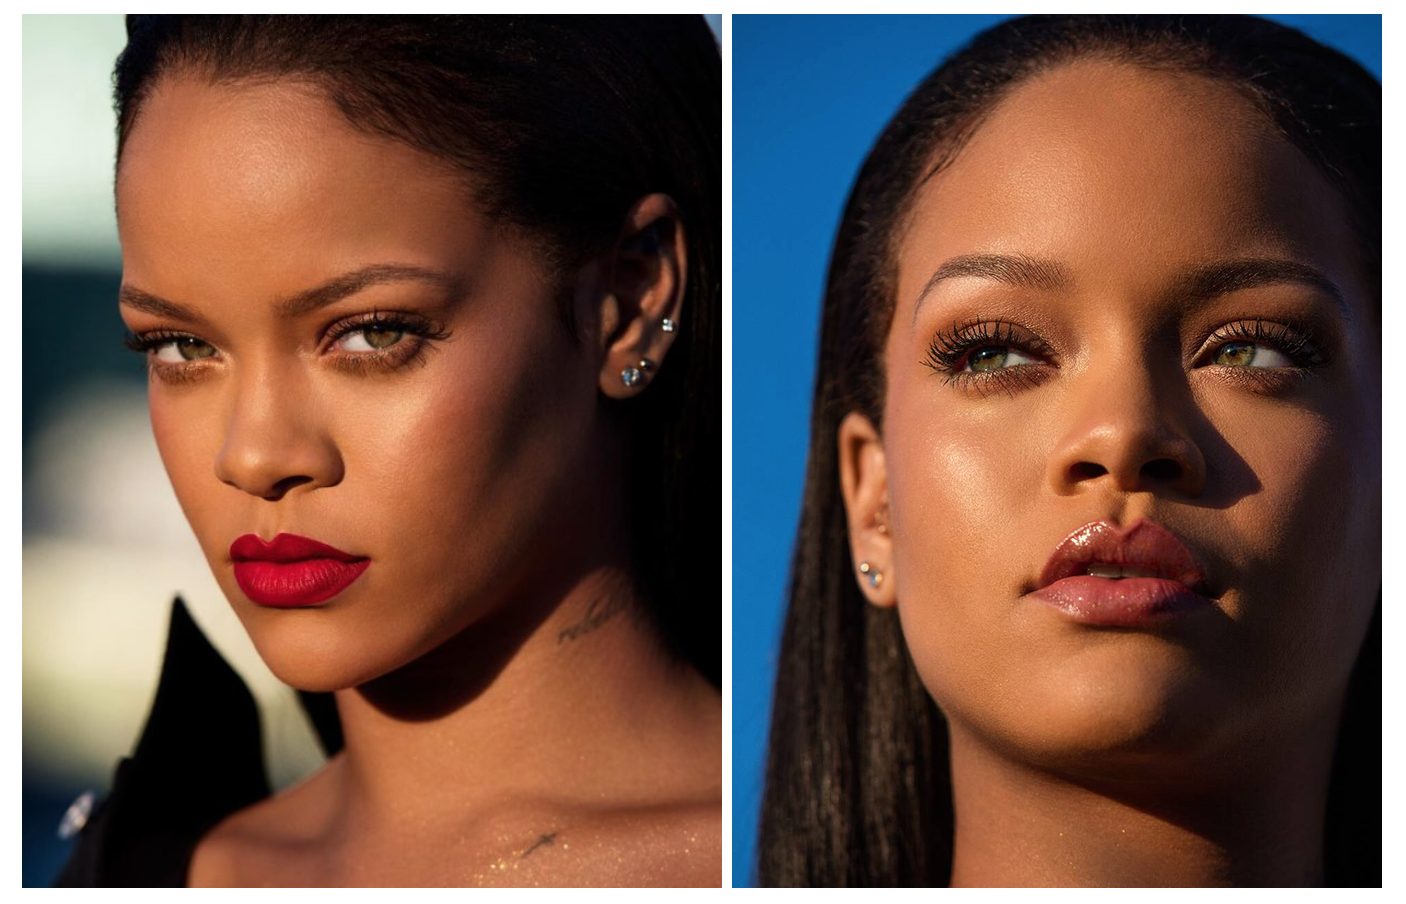 What Rihanna's LVMH Fenty Maison Means for Fashion